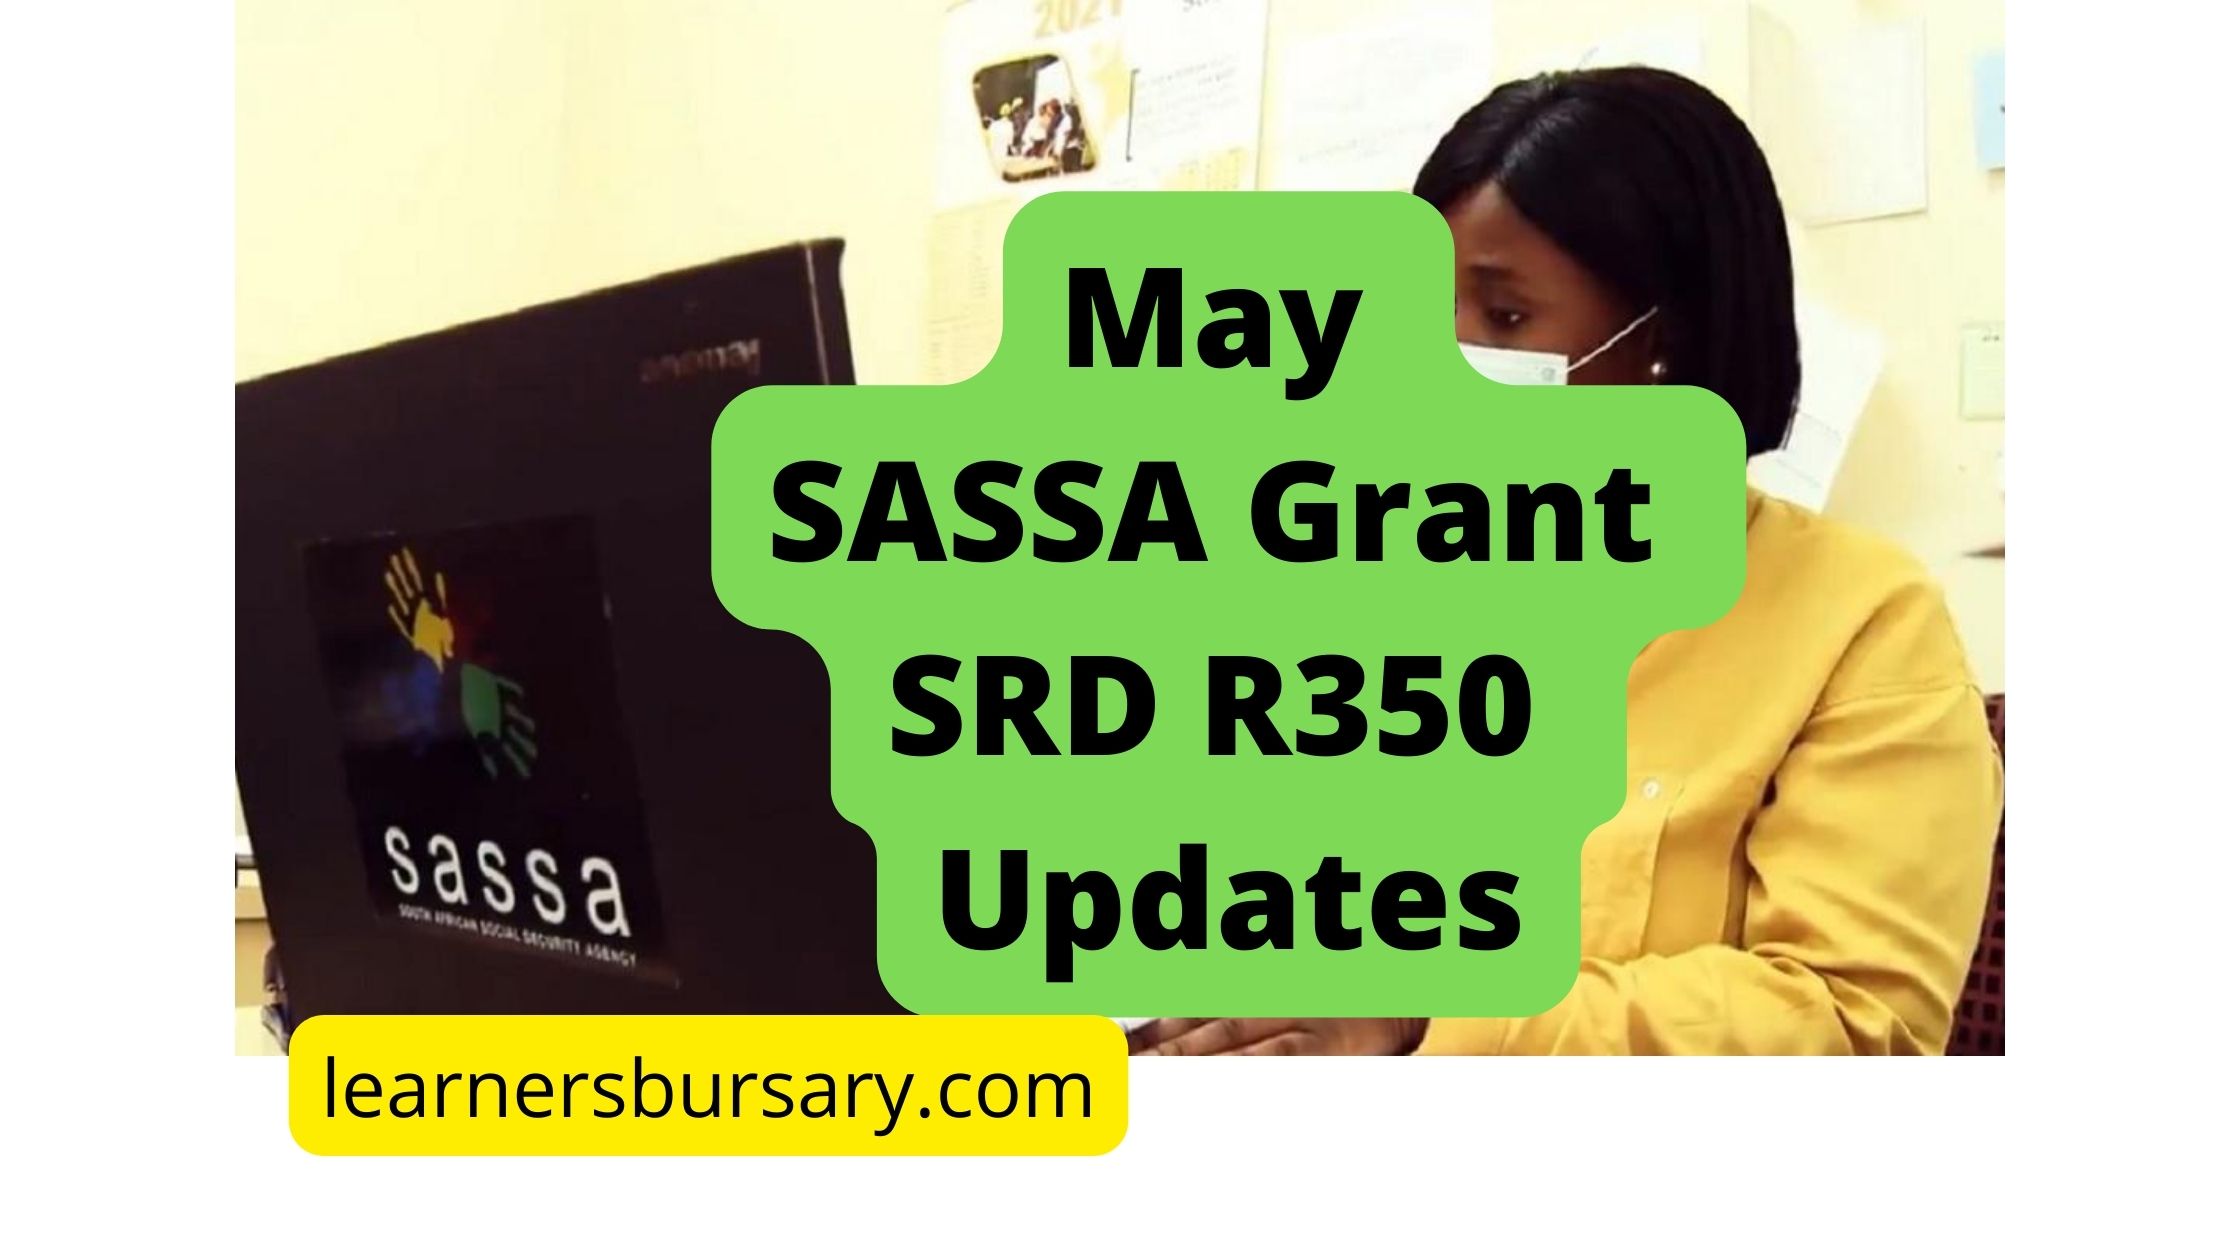 May SASSA Grant SRD R350 Updates